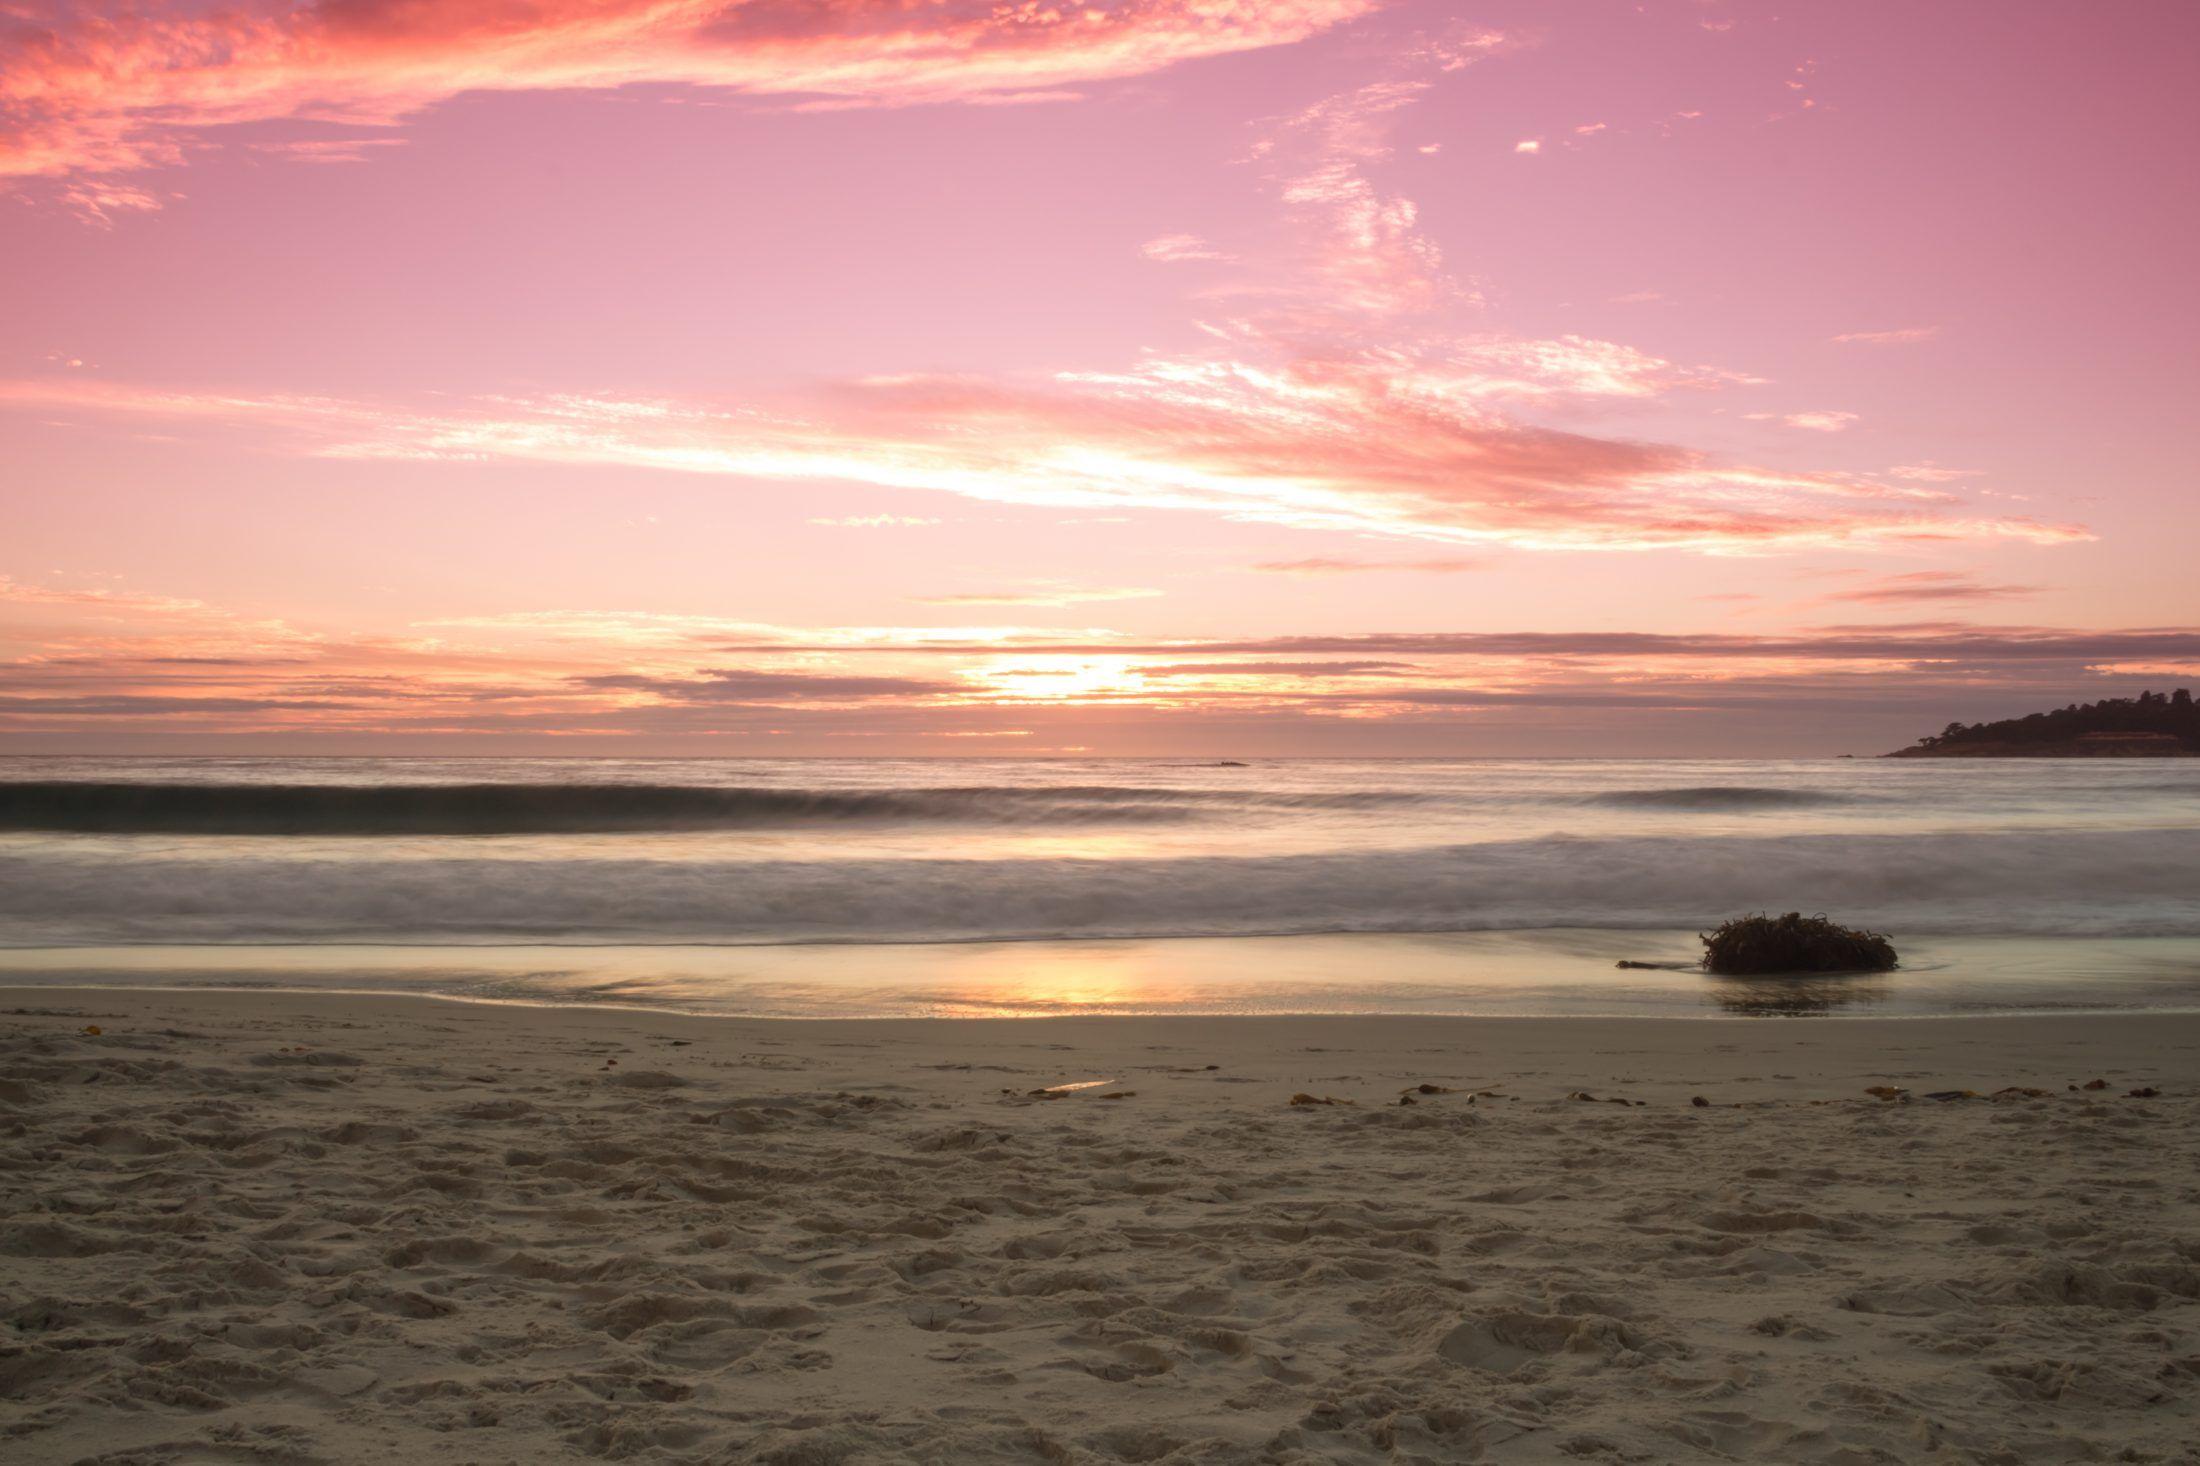 HD Wallpaper: Pink sunset over the ocean in Carmel, CA